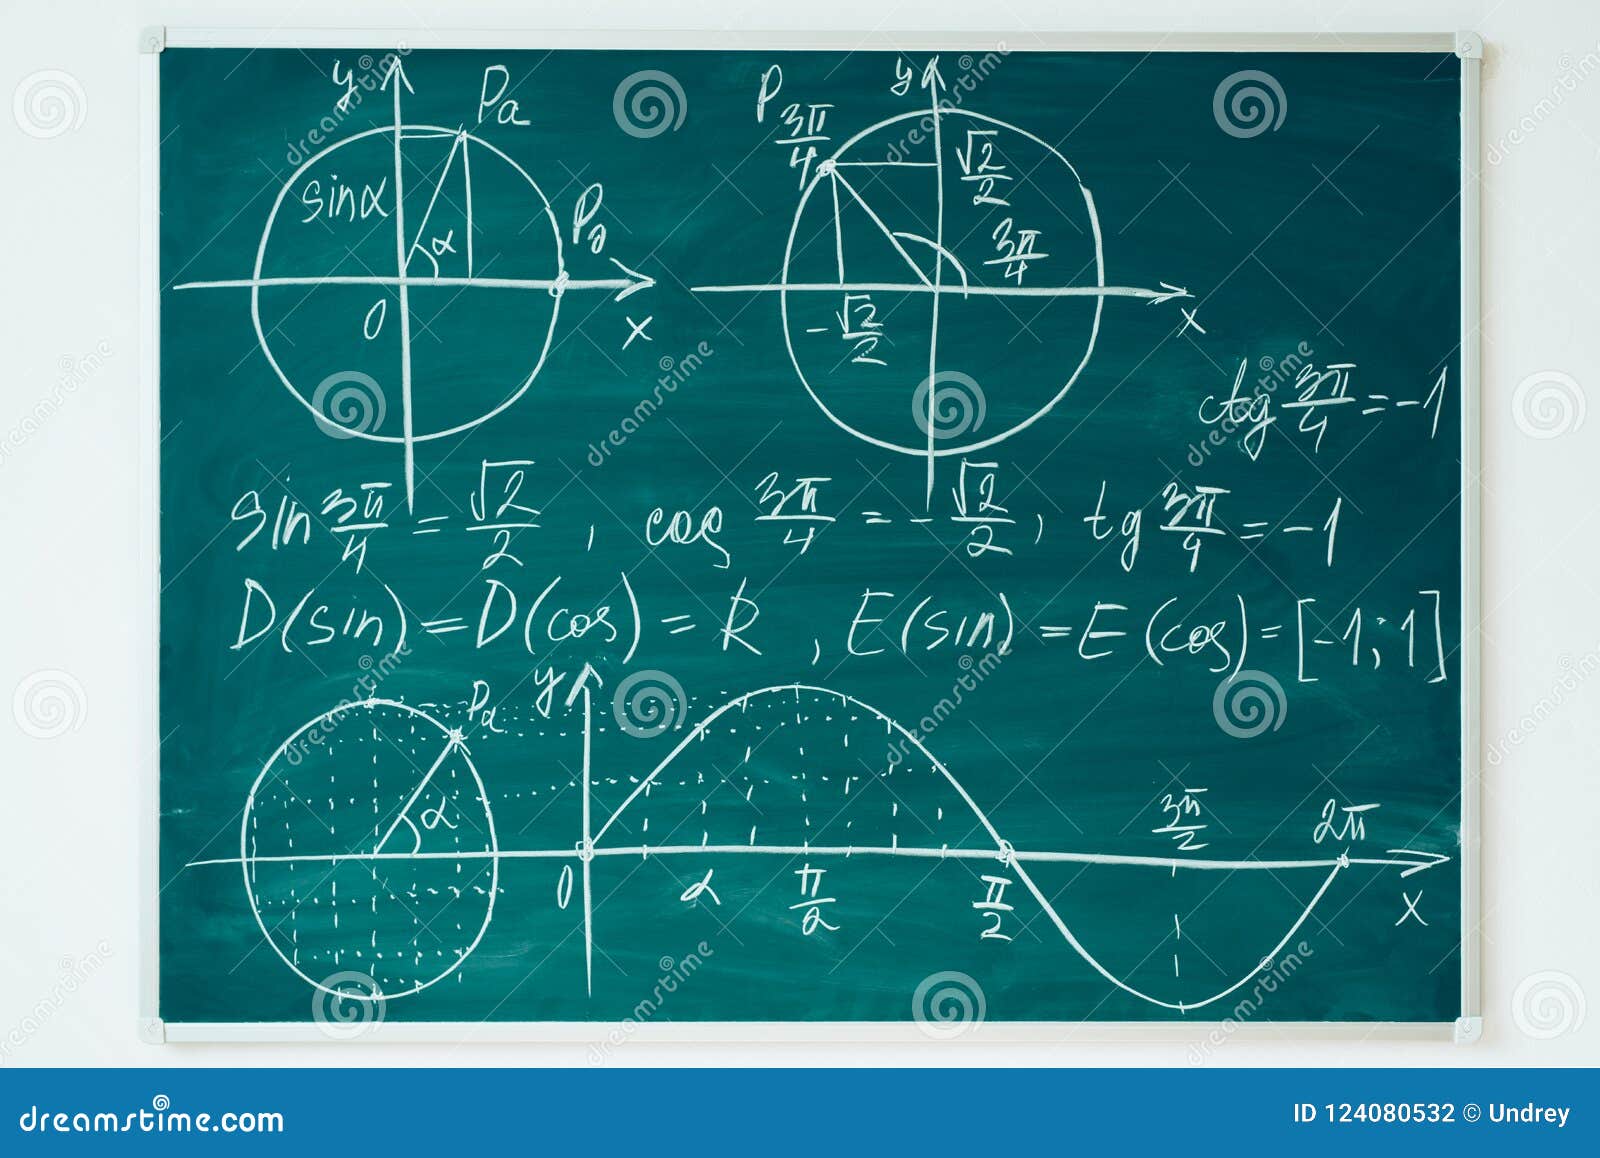 school math lesson. trigonometry. chalkboard function graphs.